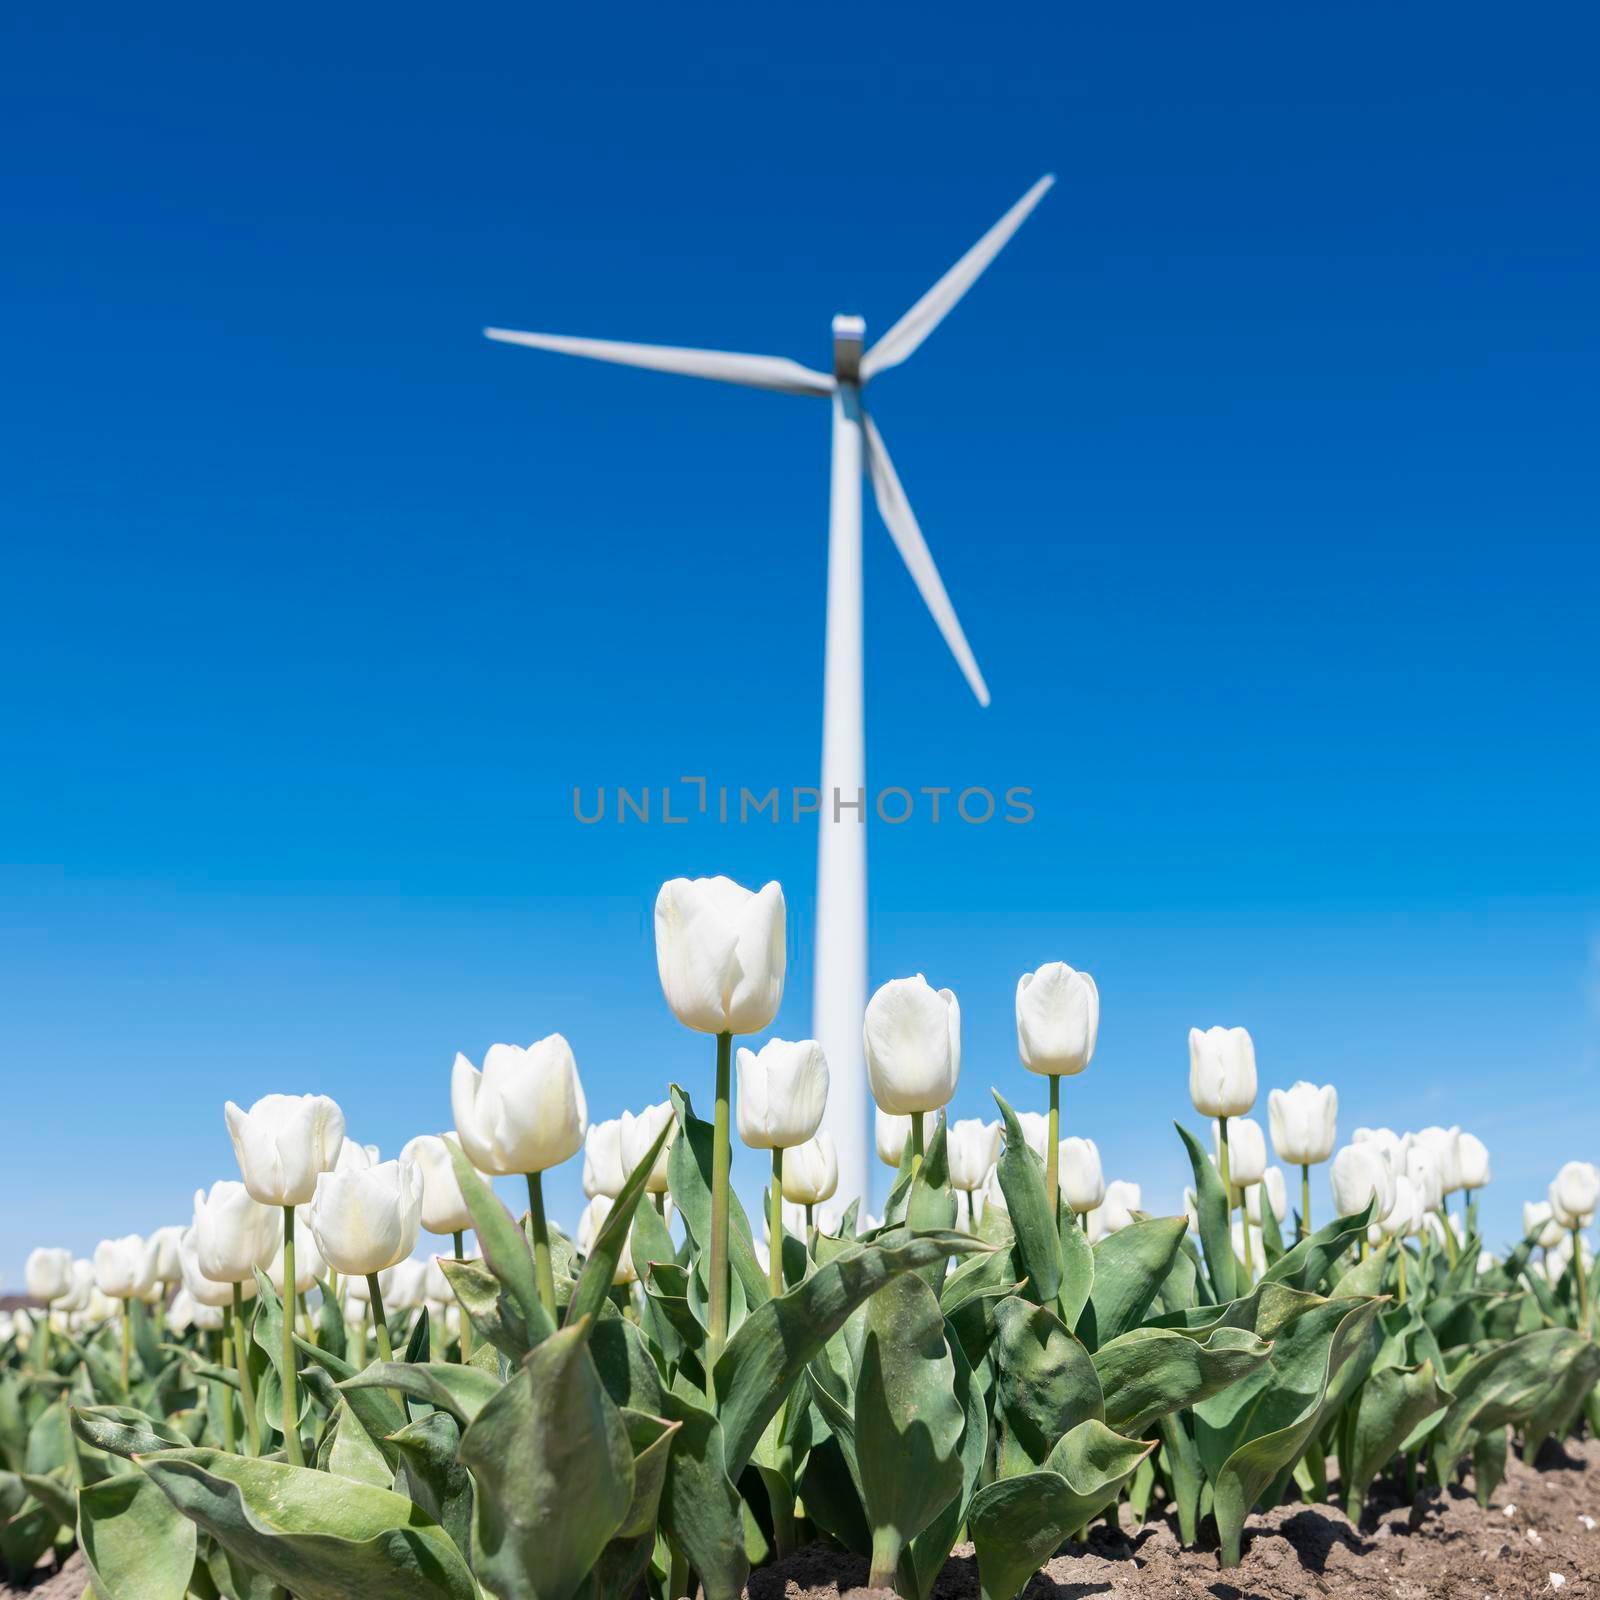 field in noordoostpolder with white tulips and wind turbines under blue sky in the netherlands